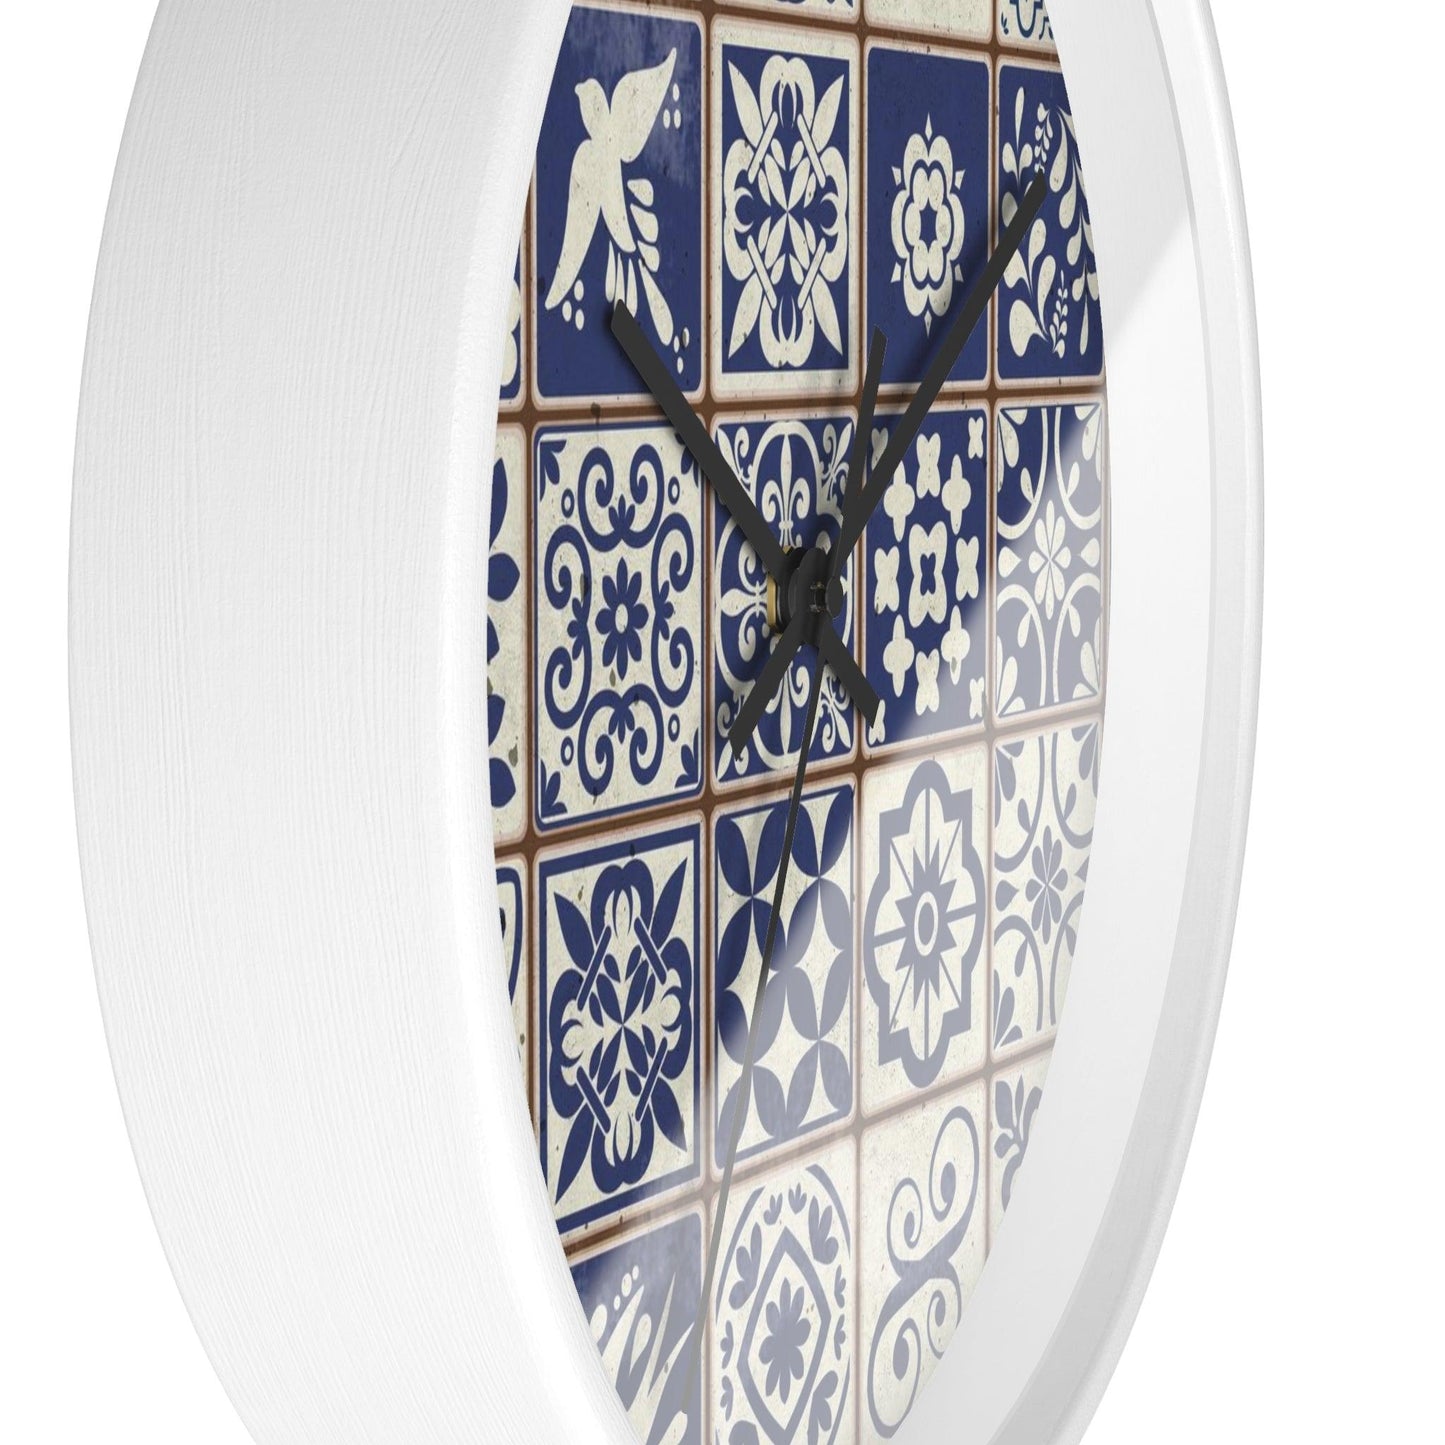 Portuguese Azulejo Tile Wall Clock - The Global Wanderer